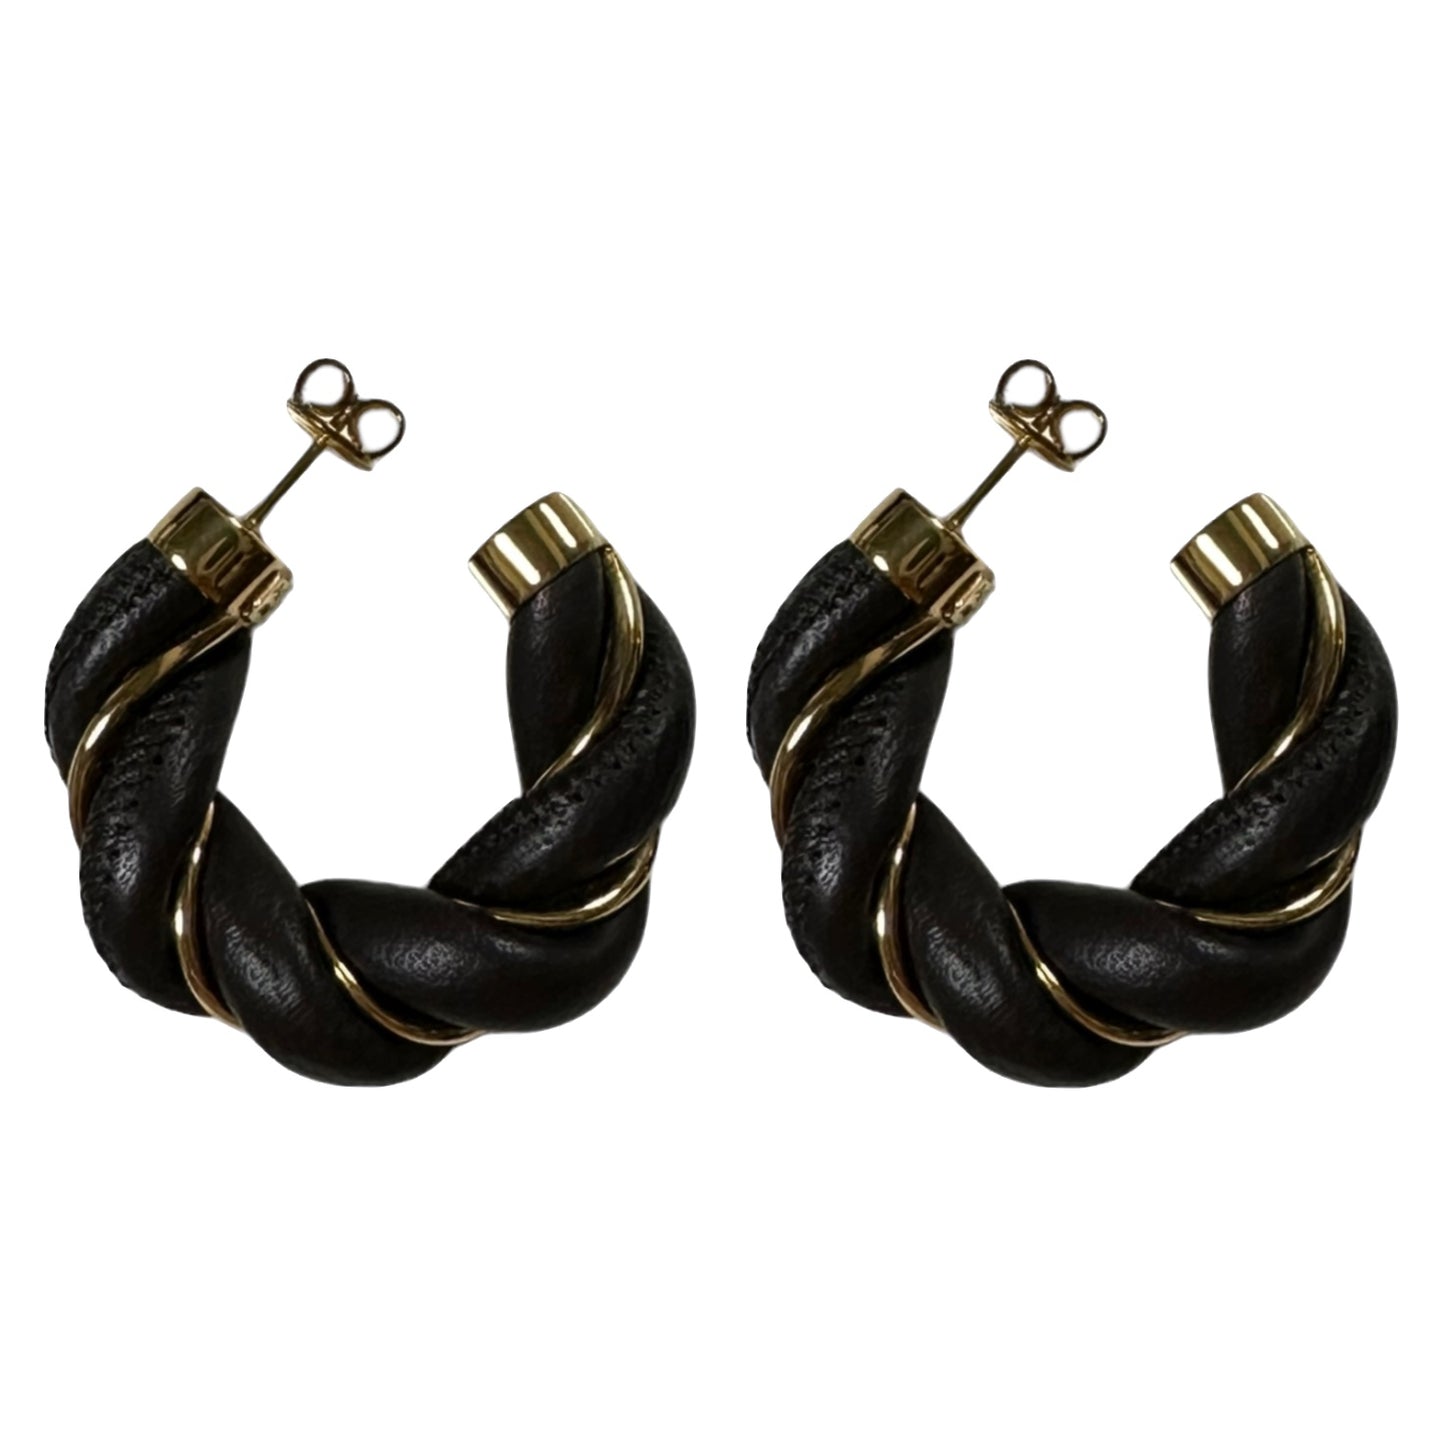 BOTTEGA VENETA Fall Winter 2020 Twist Gold-plated and Leather Hoop Earrings